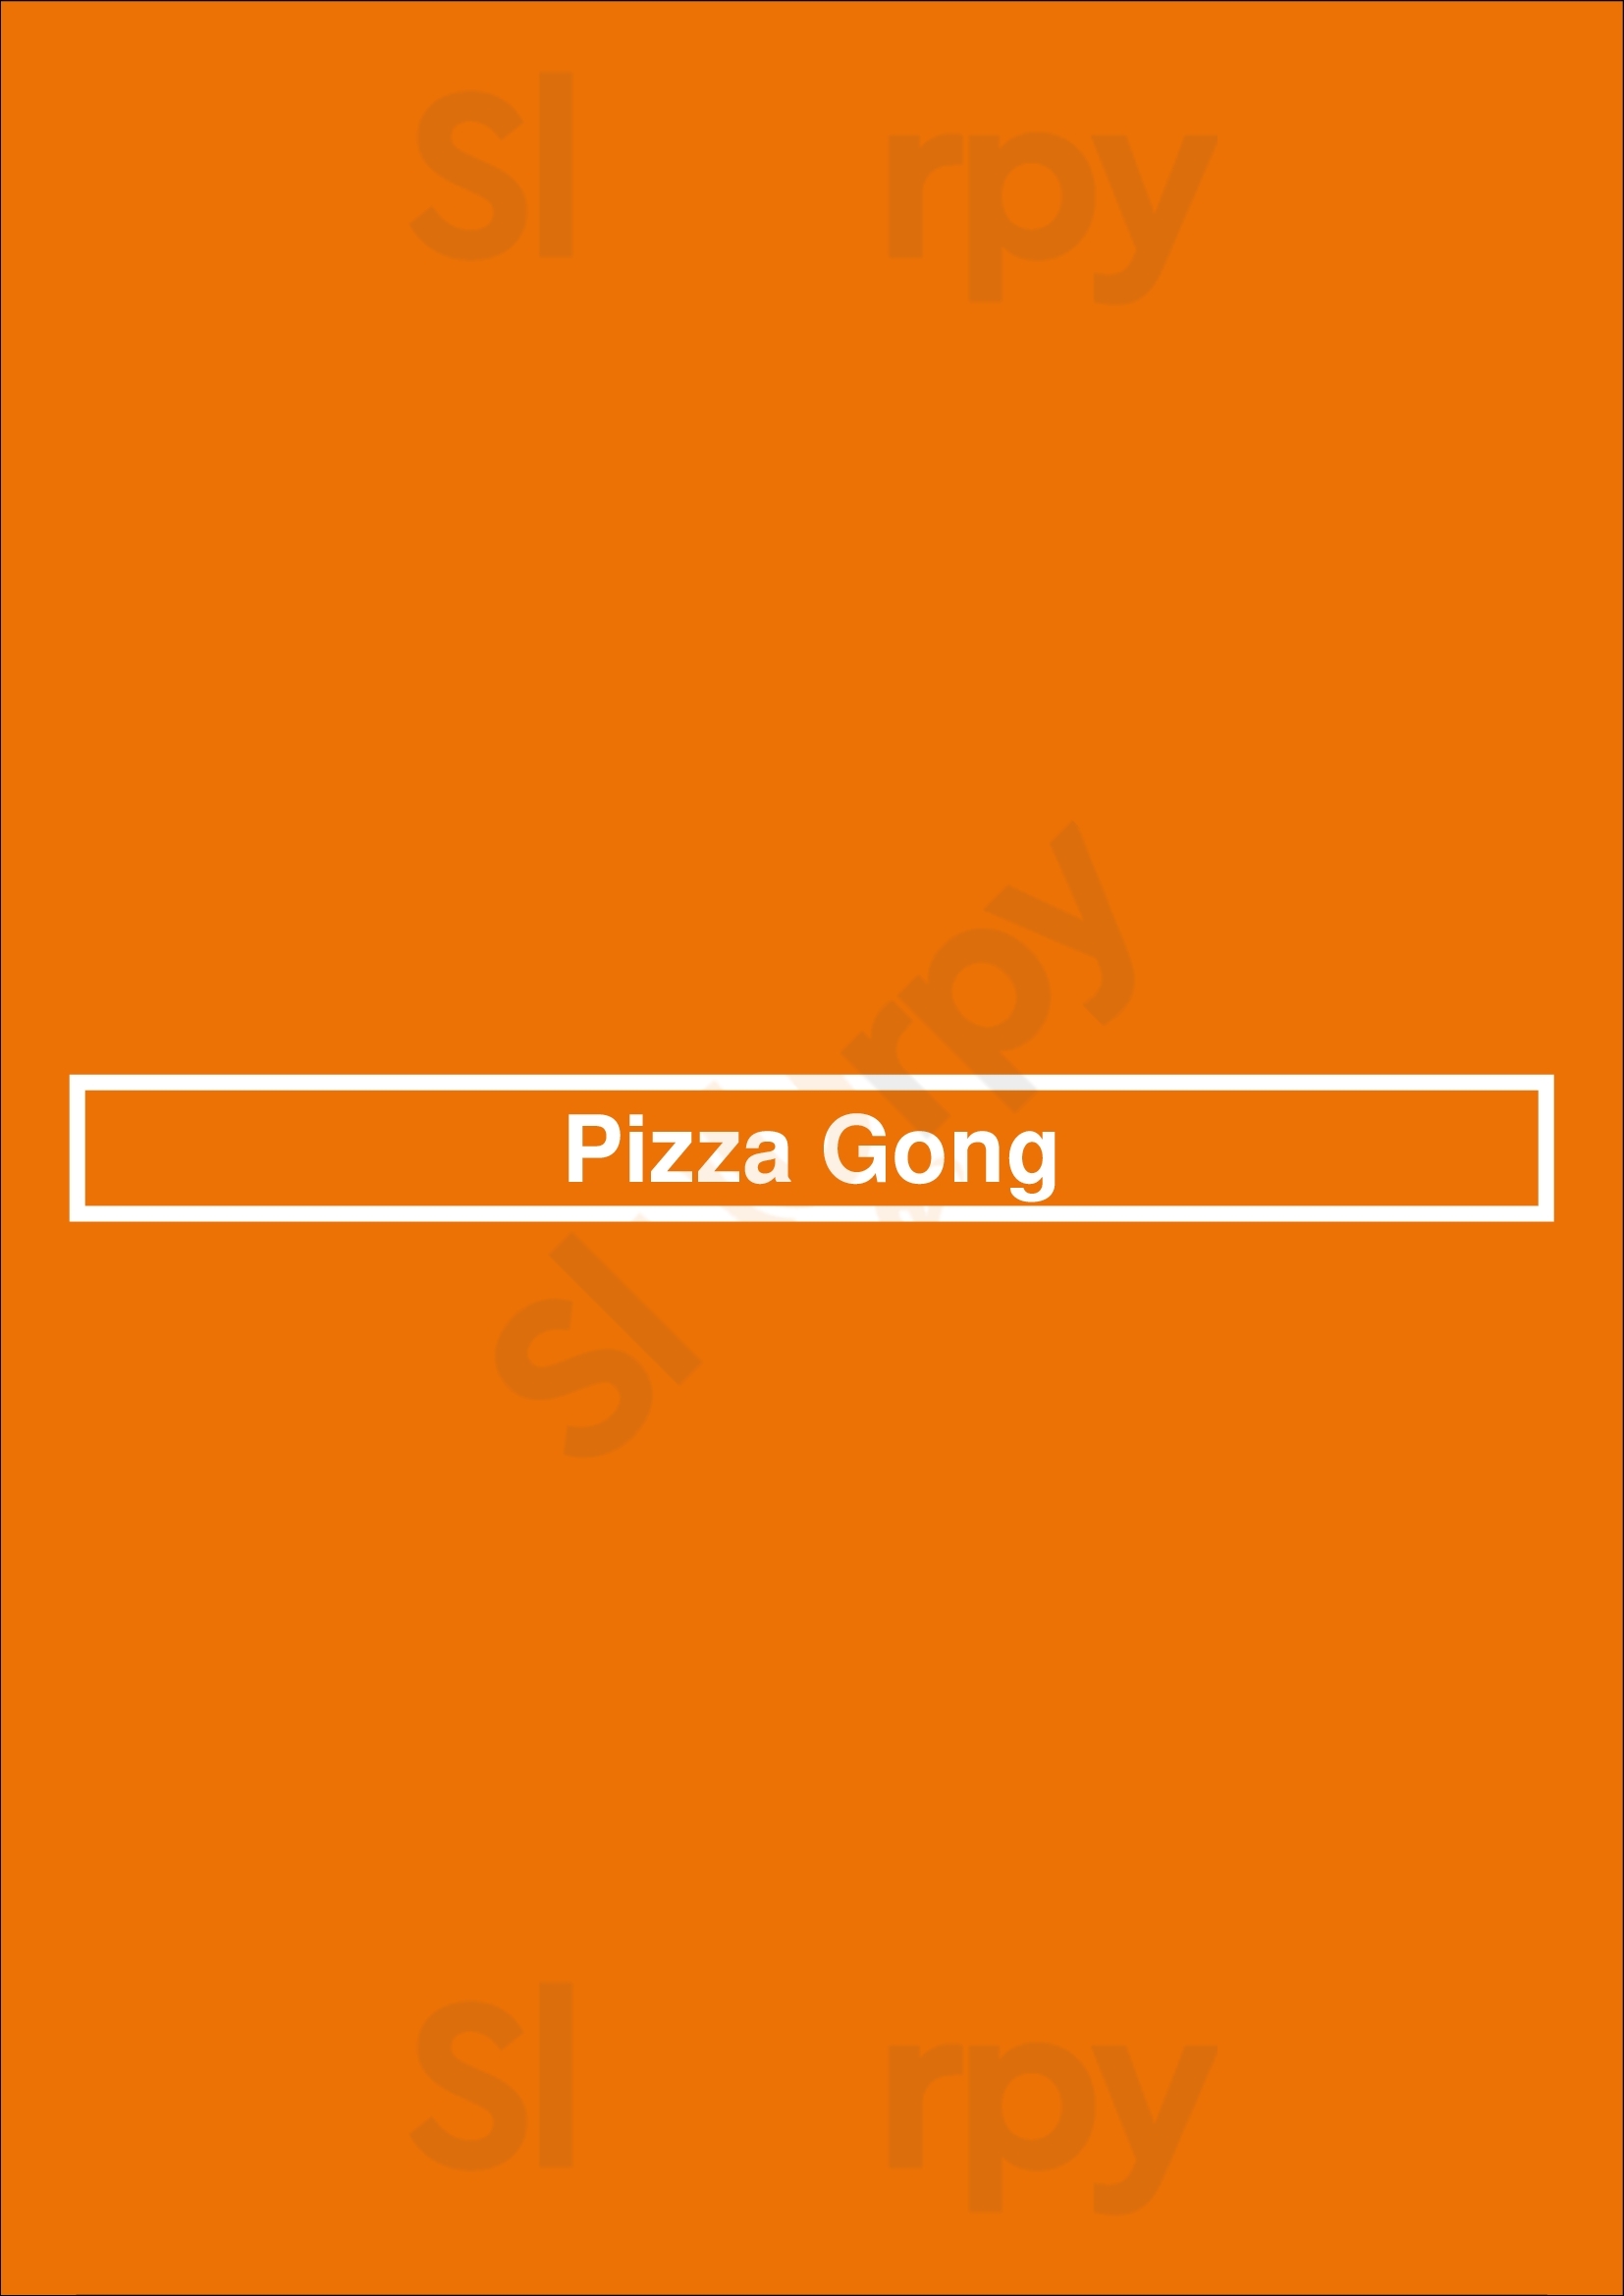 Pizza Gong Winnipeg Menu - 1